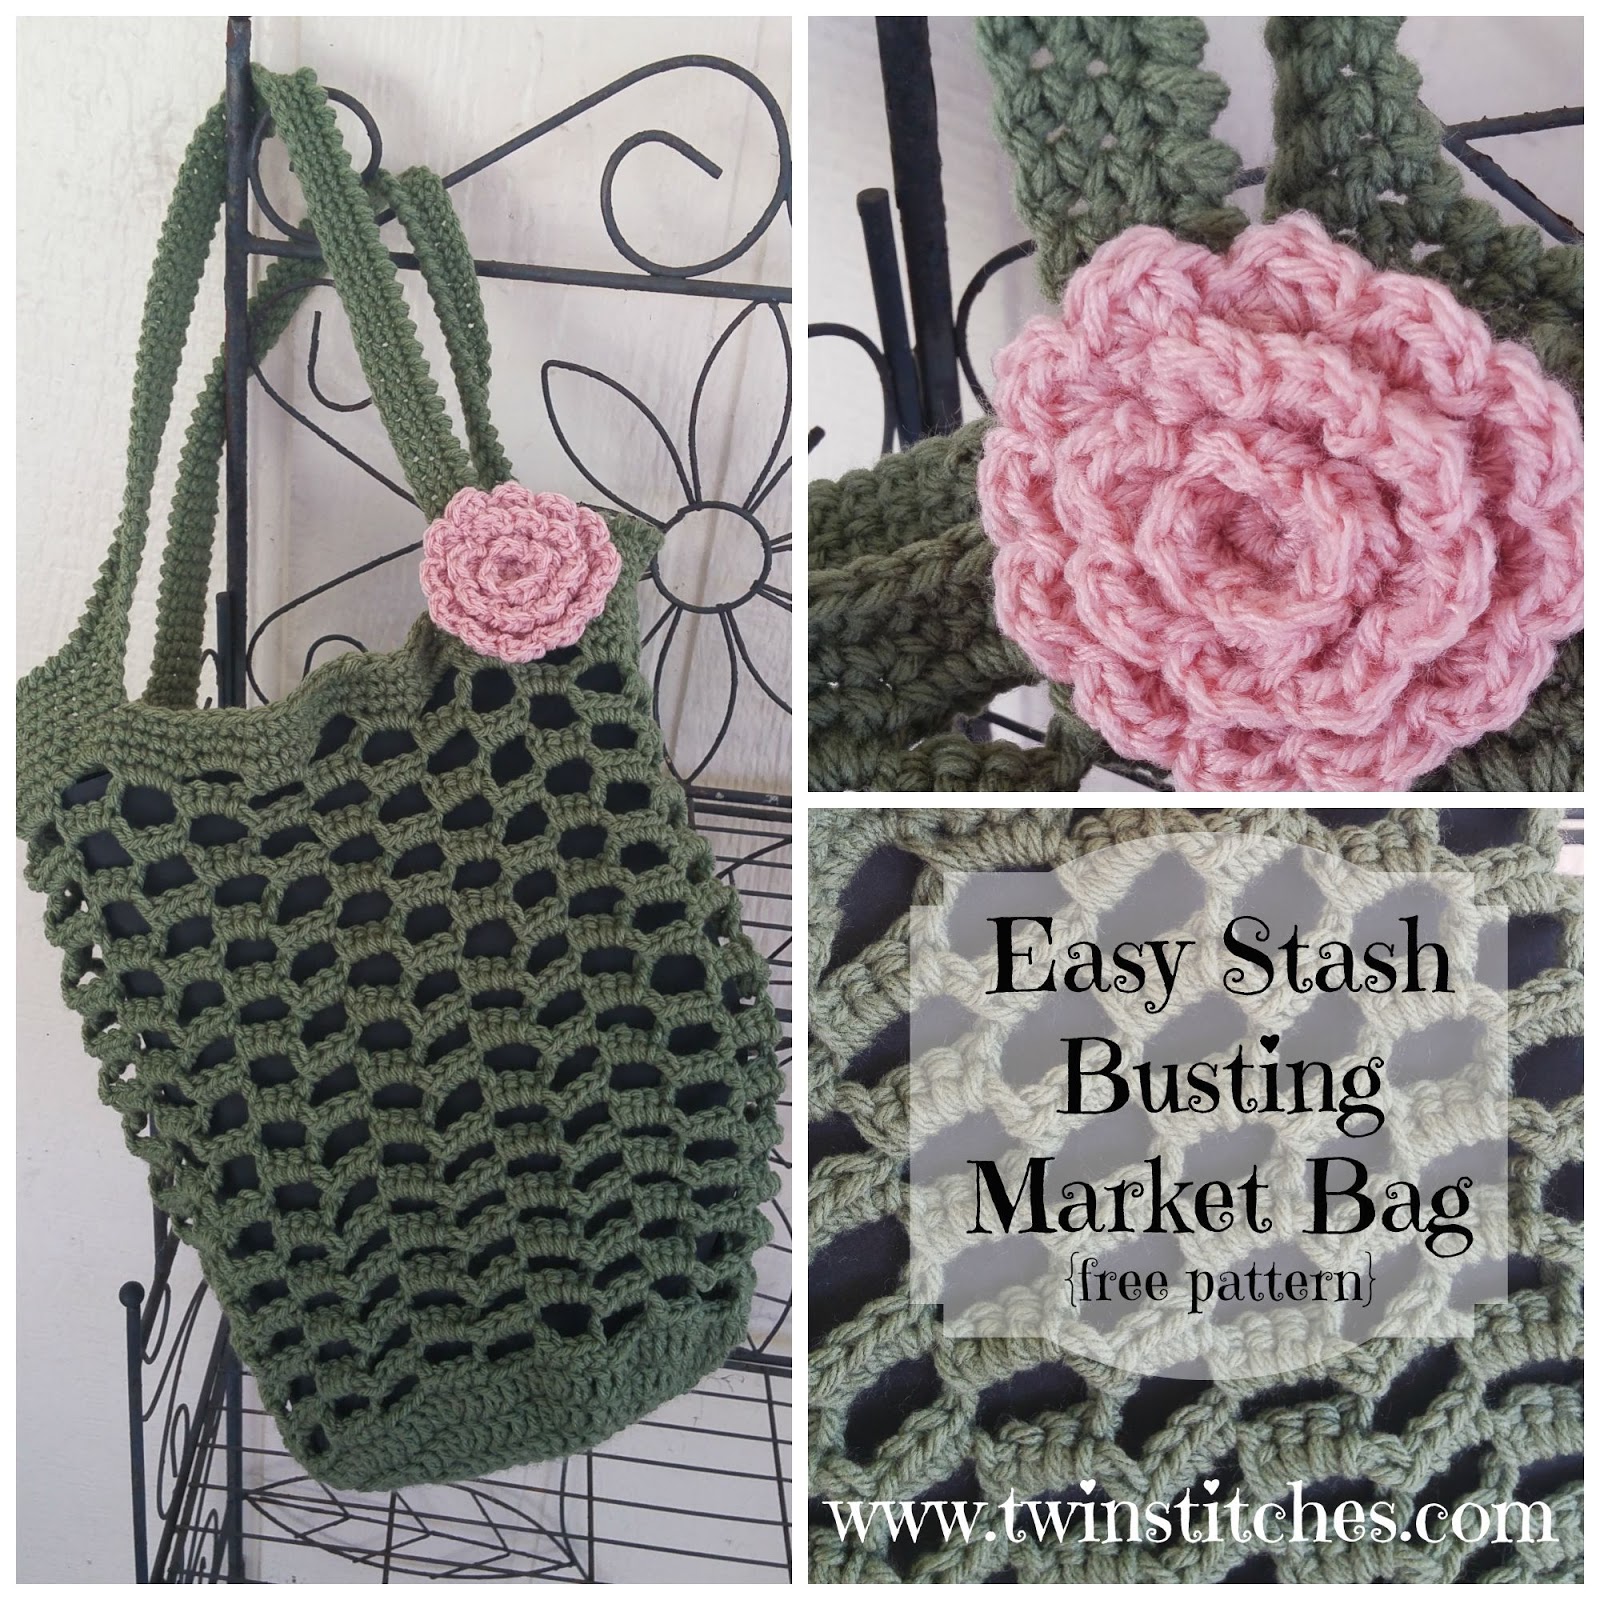 How to Crochet a Reusable Market Bag